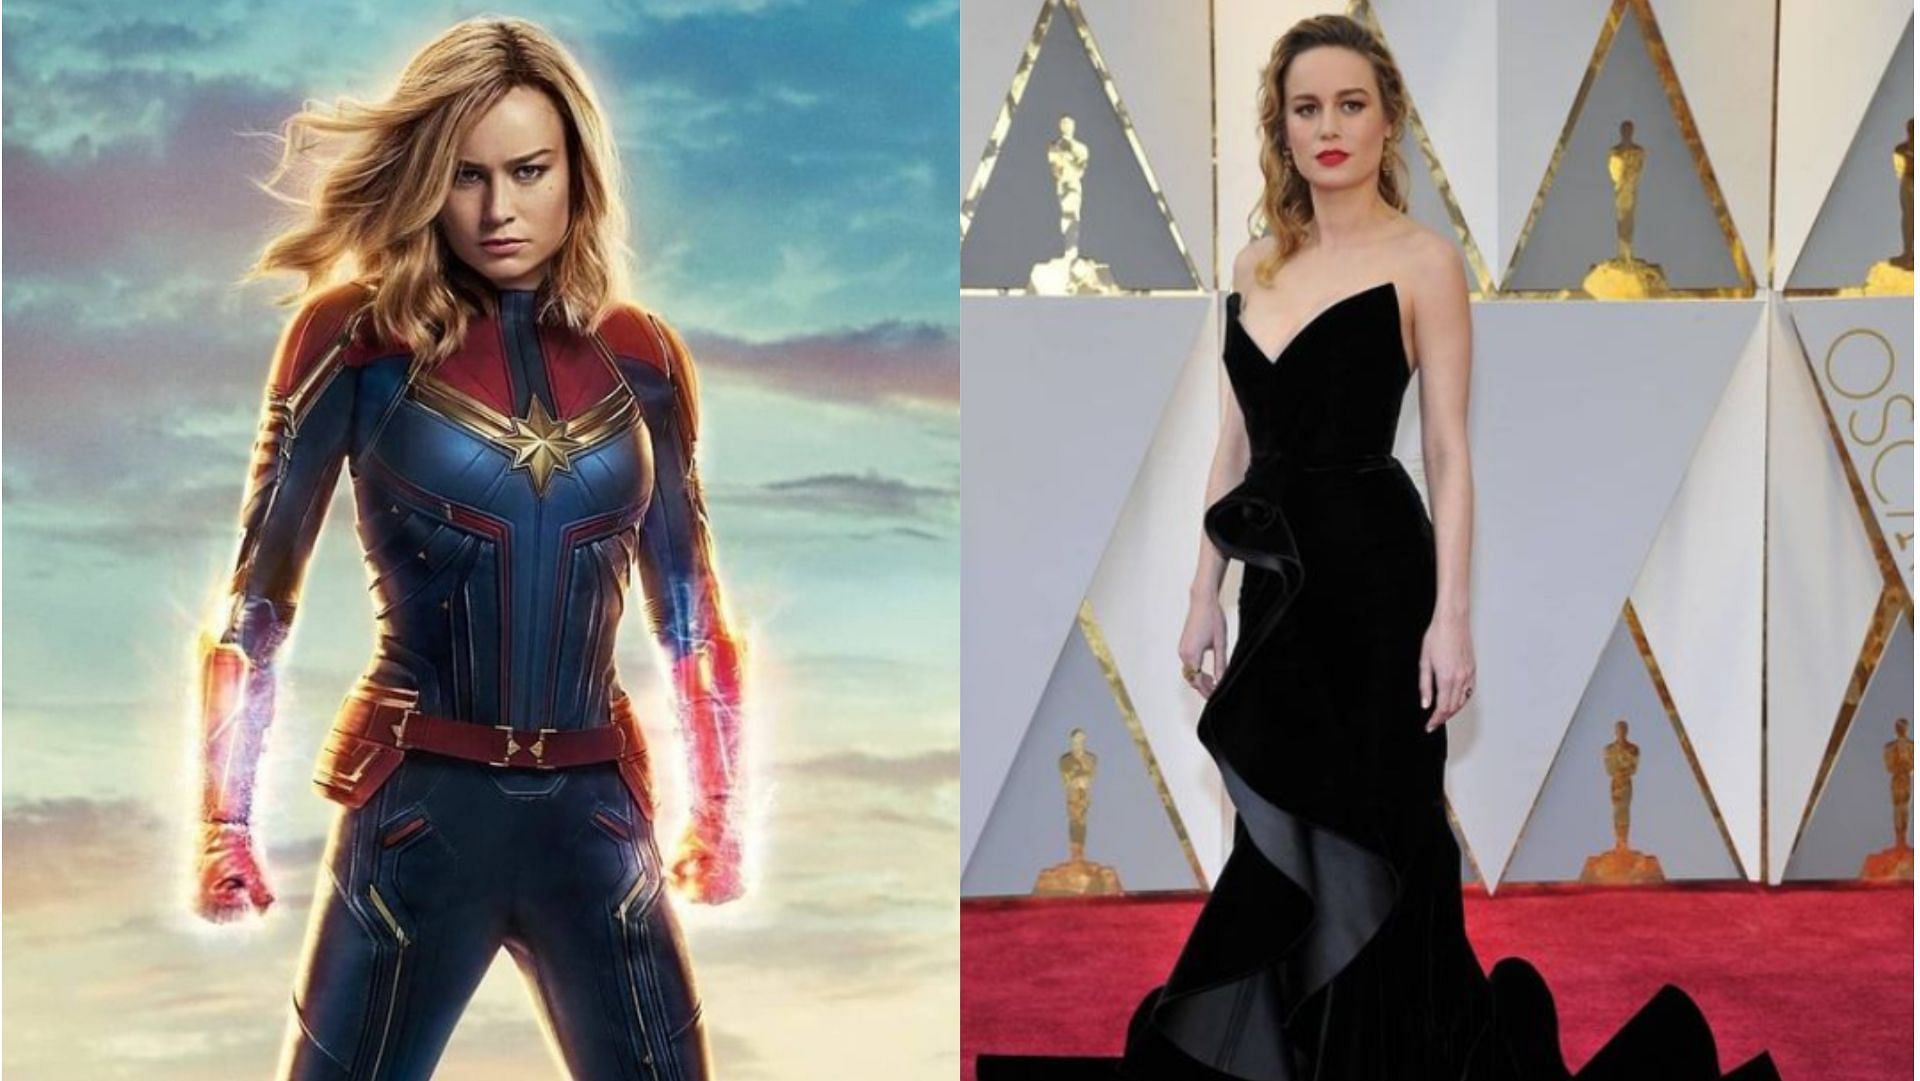 Brie Larson trained hard for her superhero physique in Captain Marvel. (Image via Instagram/Brie Larson)